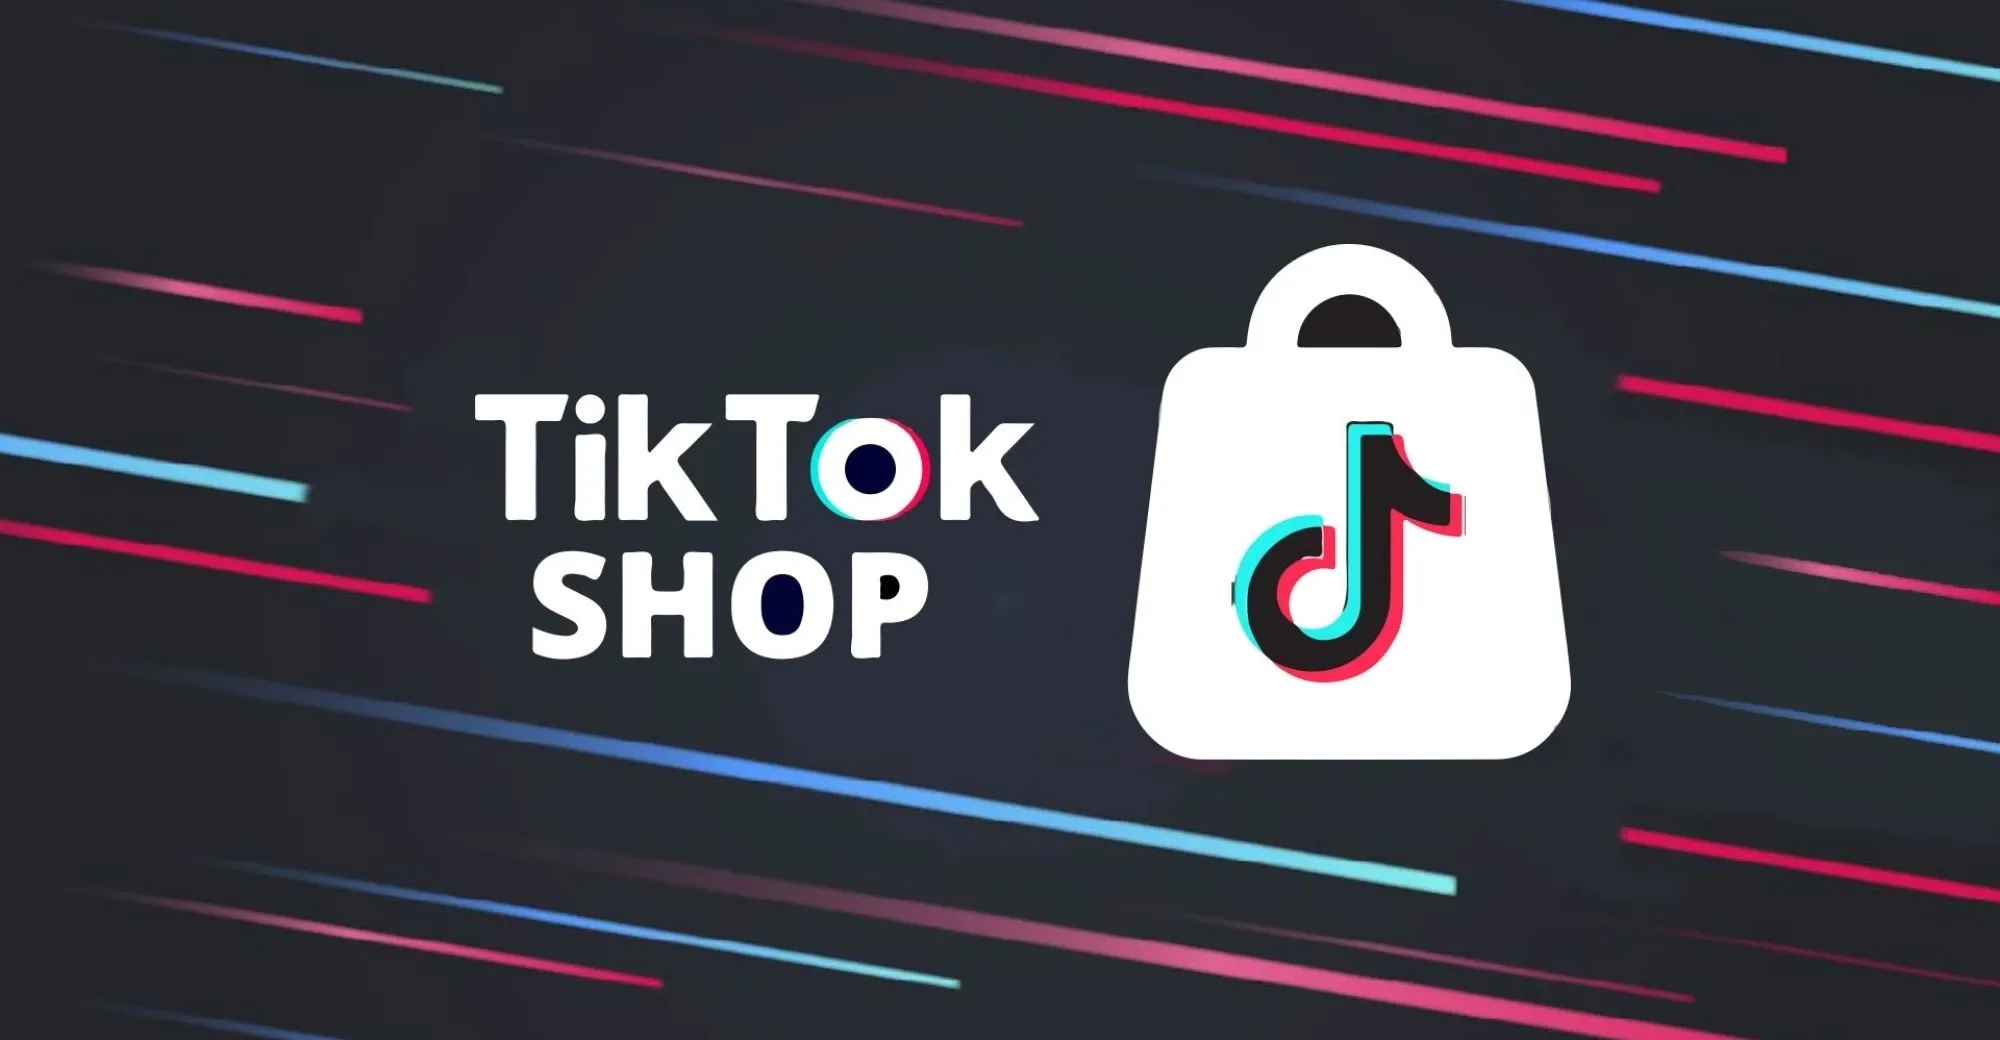 TikTok Shop заключает партнерство "купи сейчас, плати позже"